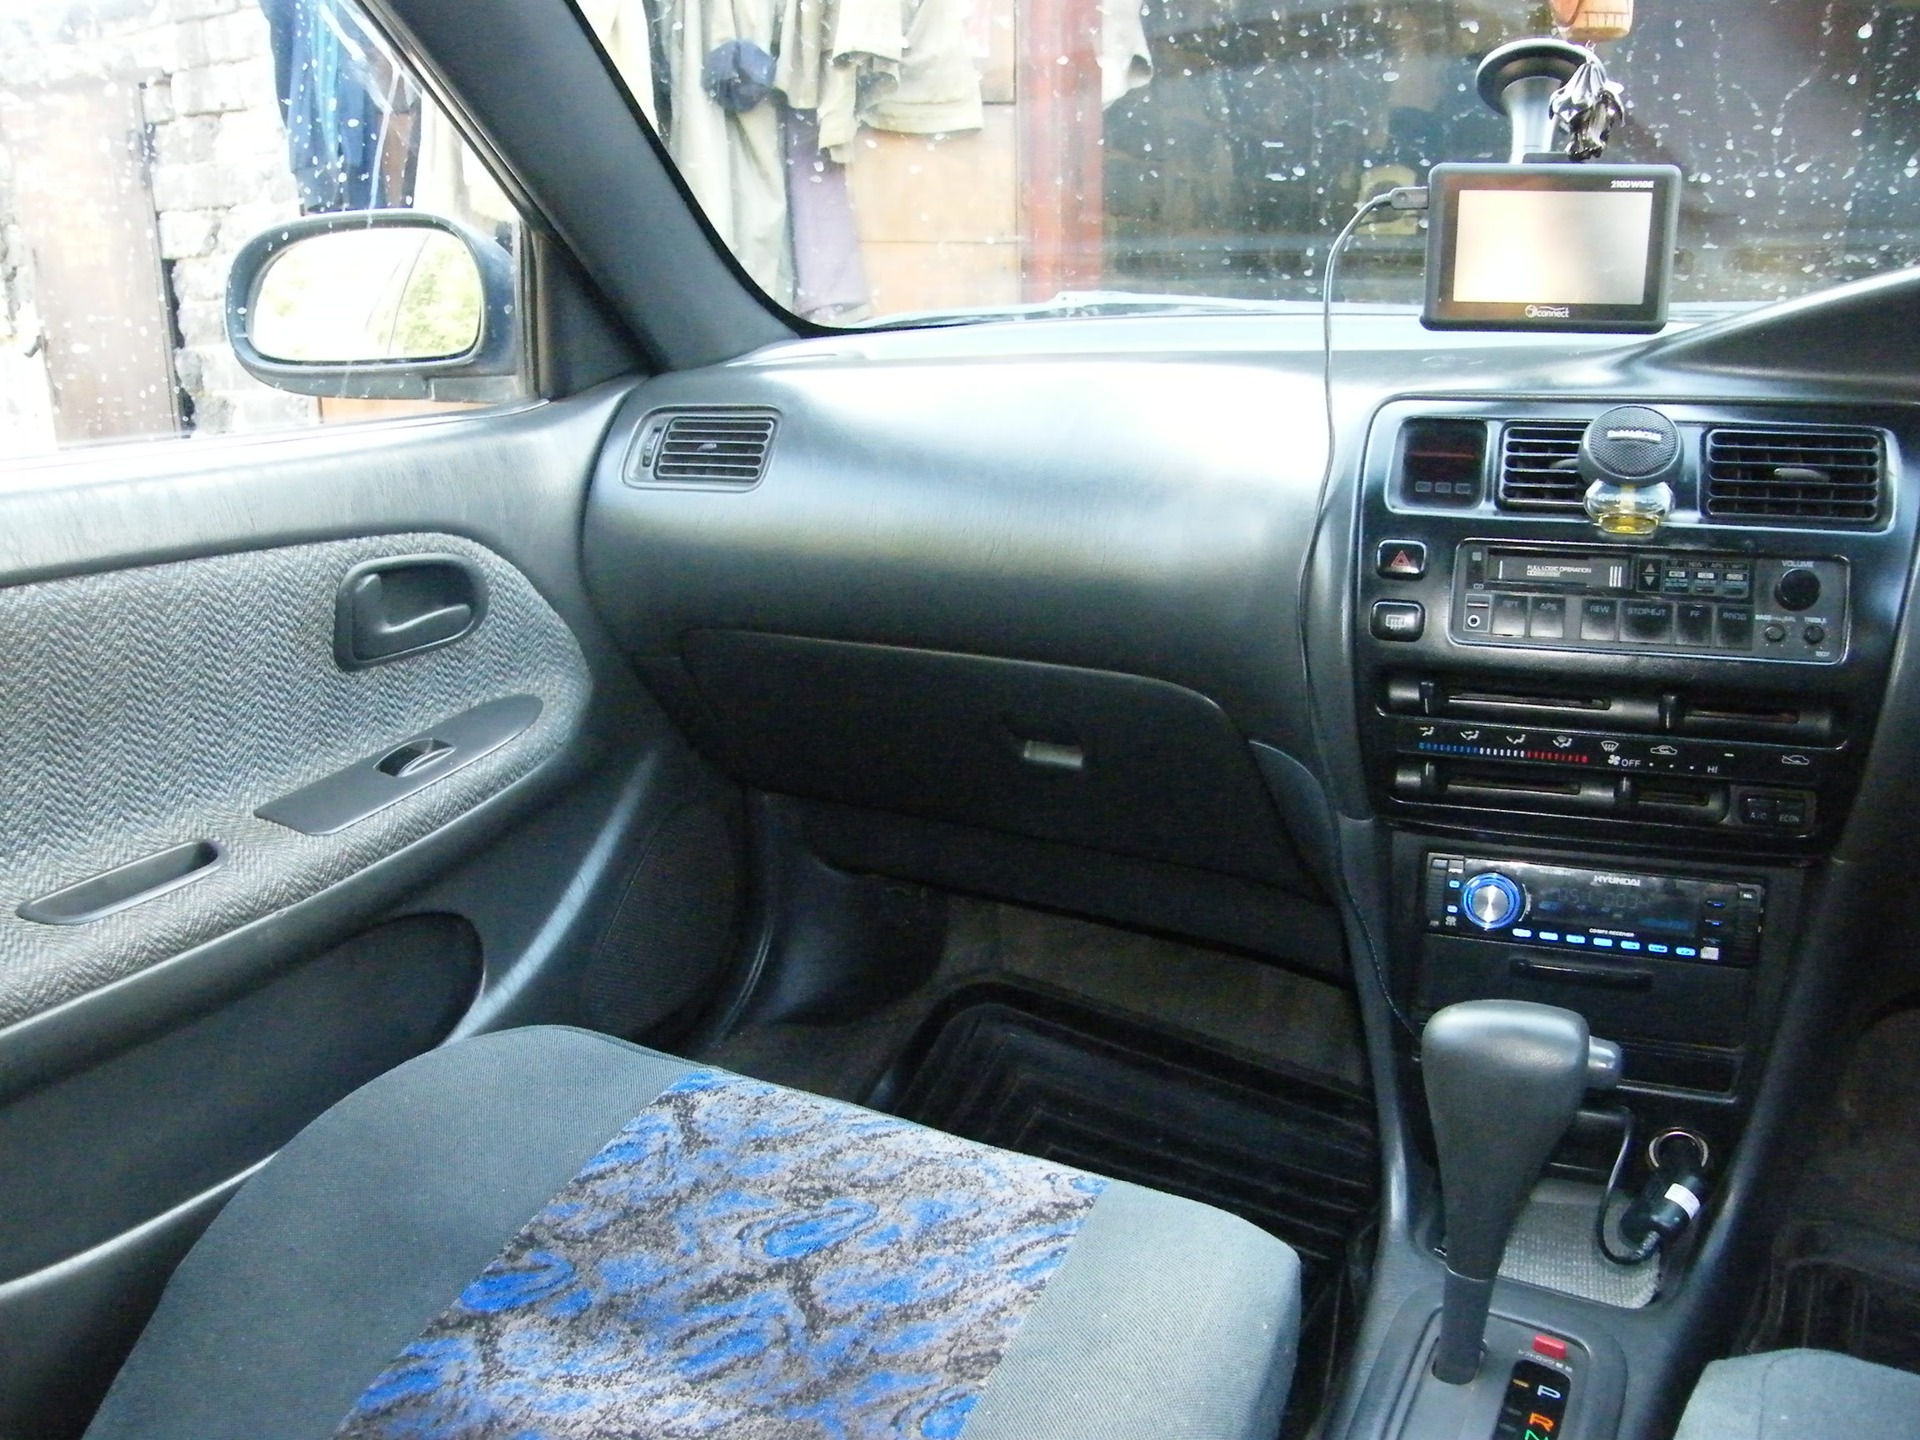  2010 Toyota Corolla 15 1992 